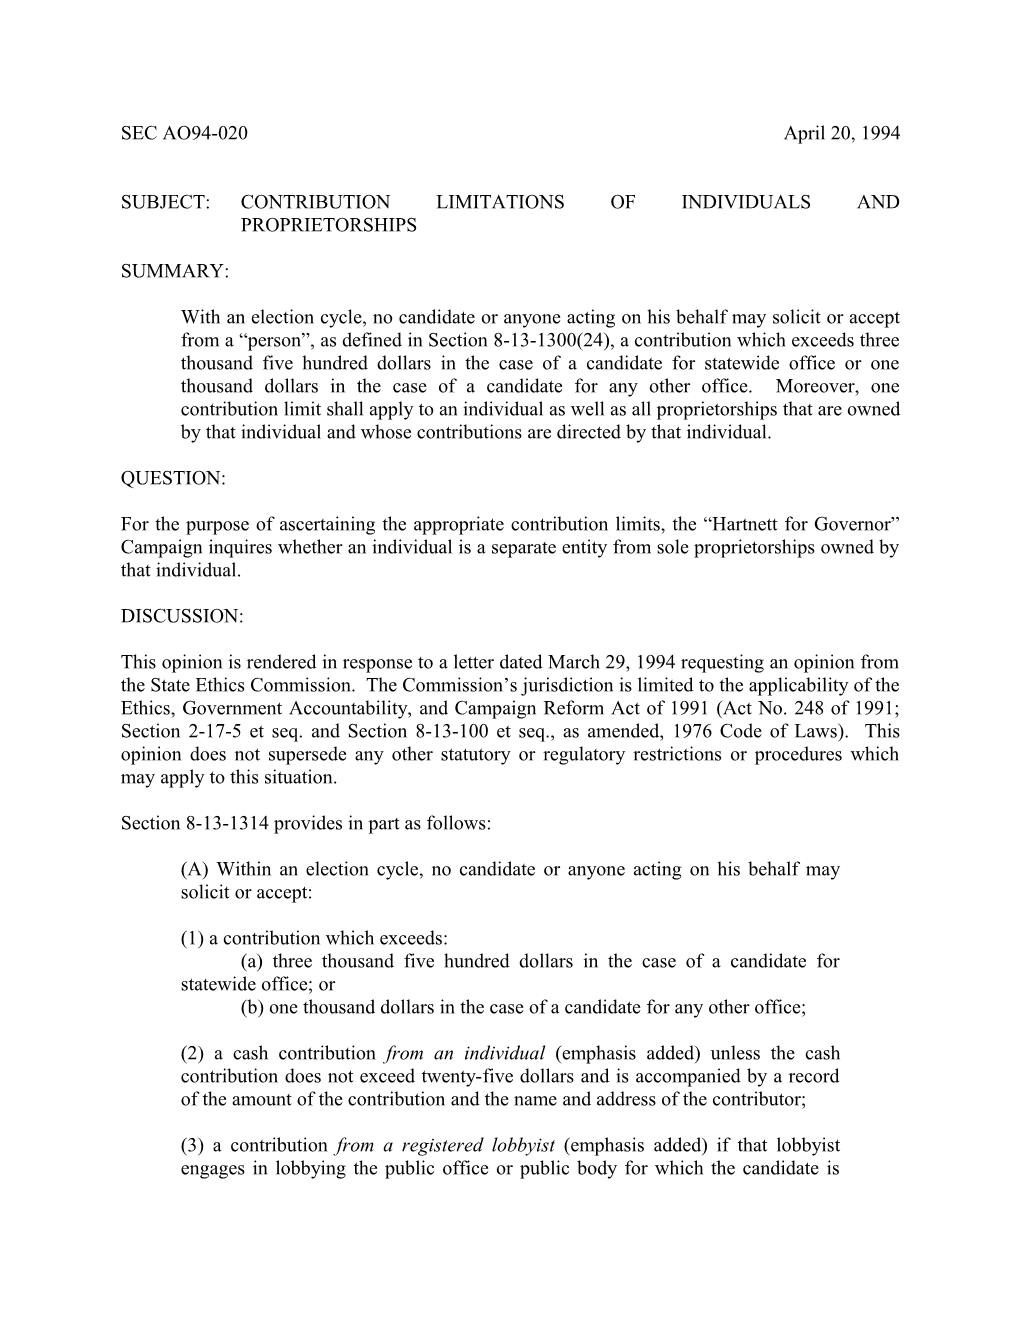 Subject: Contribution Limitations of Individuals and Proprietorships